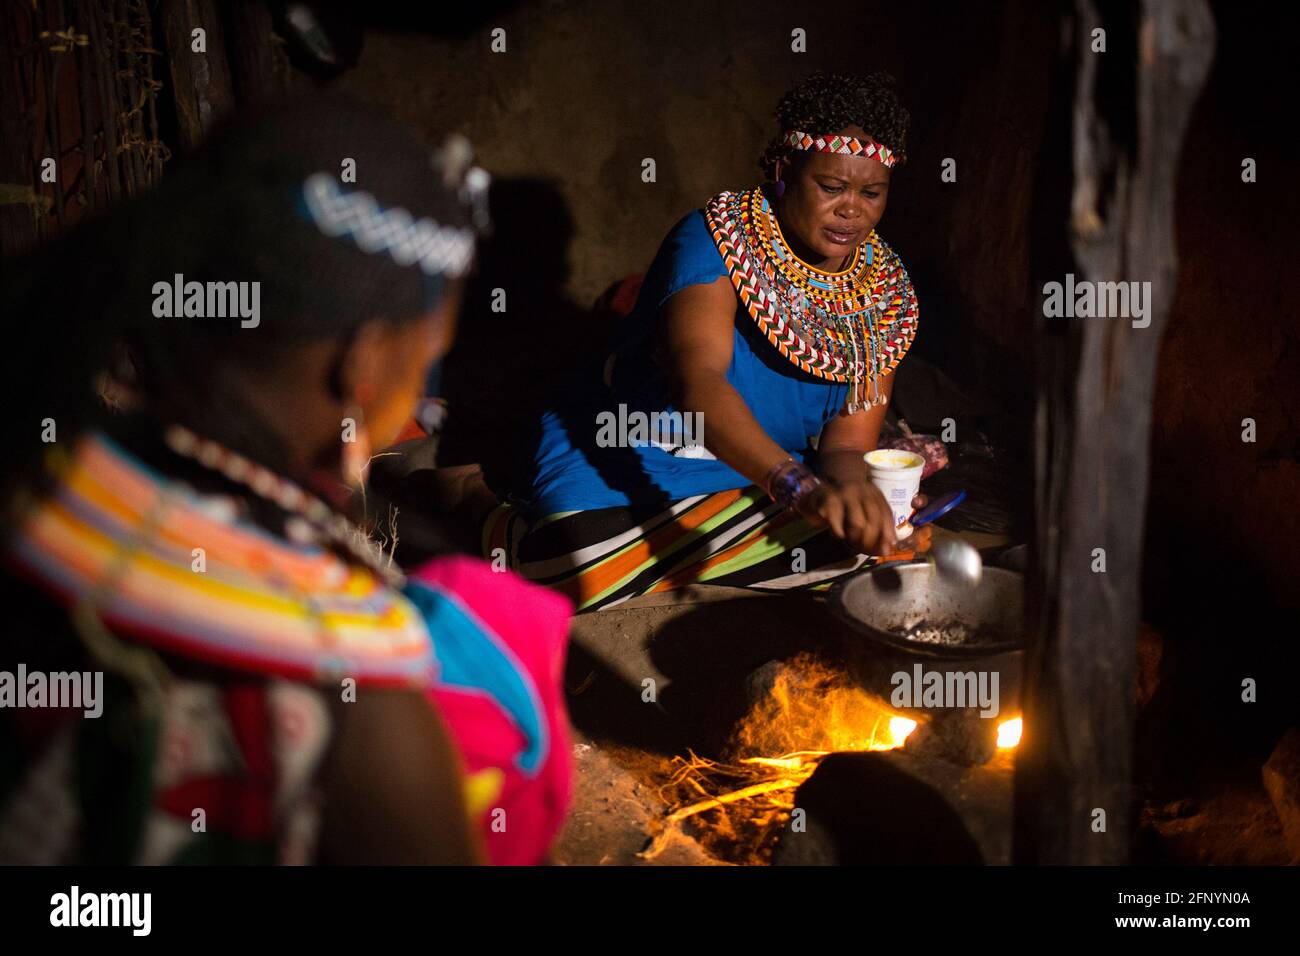 Women cook in their home in the village of Umoja, Samburu, Kenya on February 19, 2015. Stock Photo